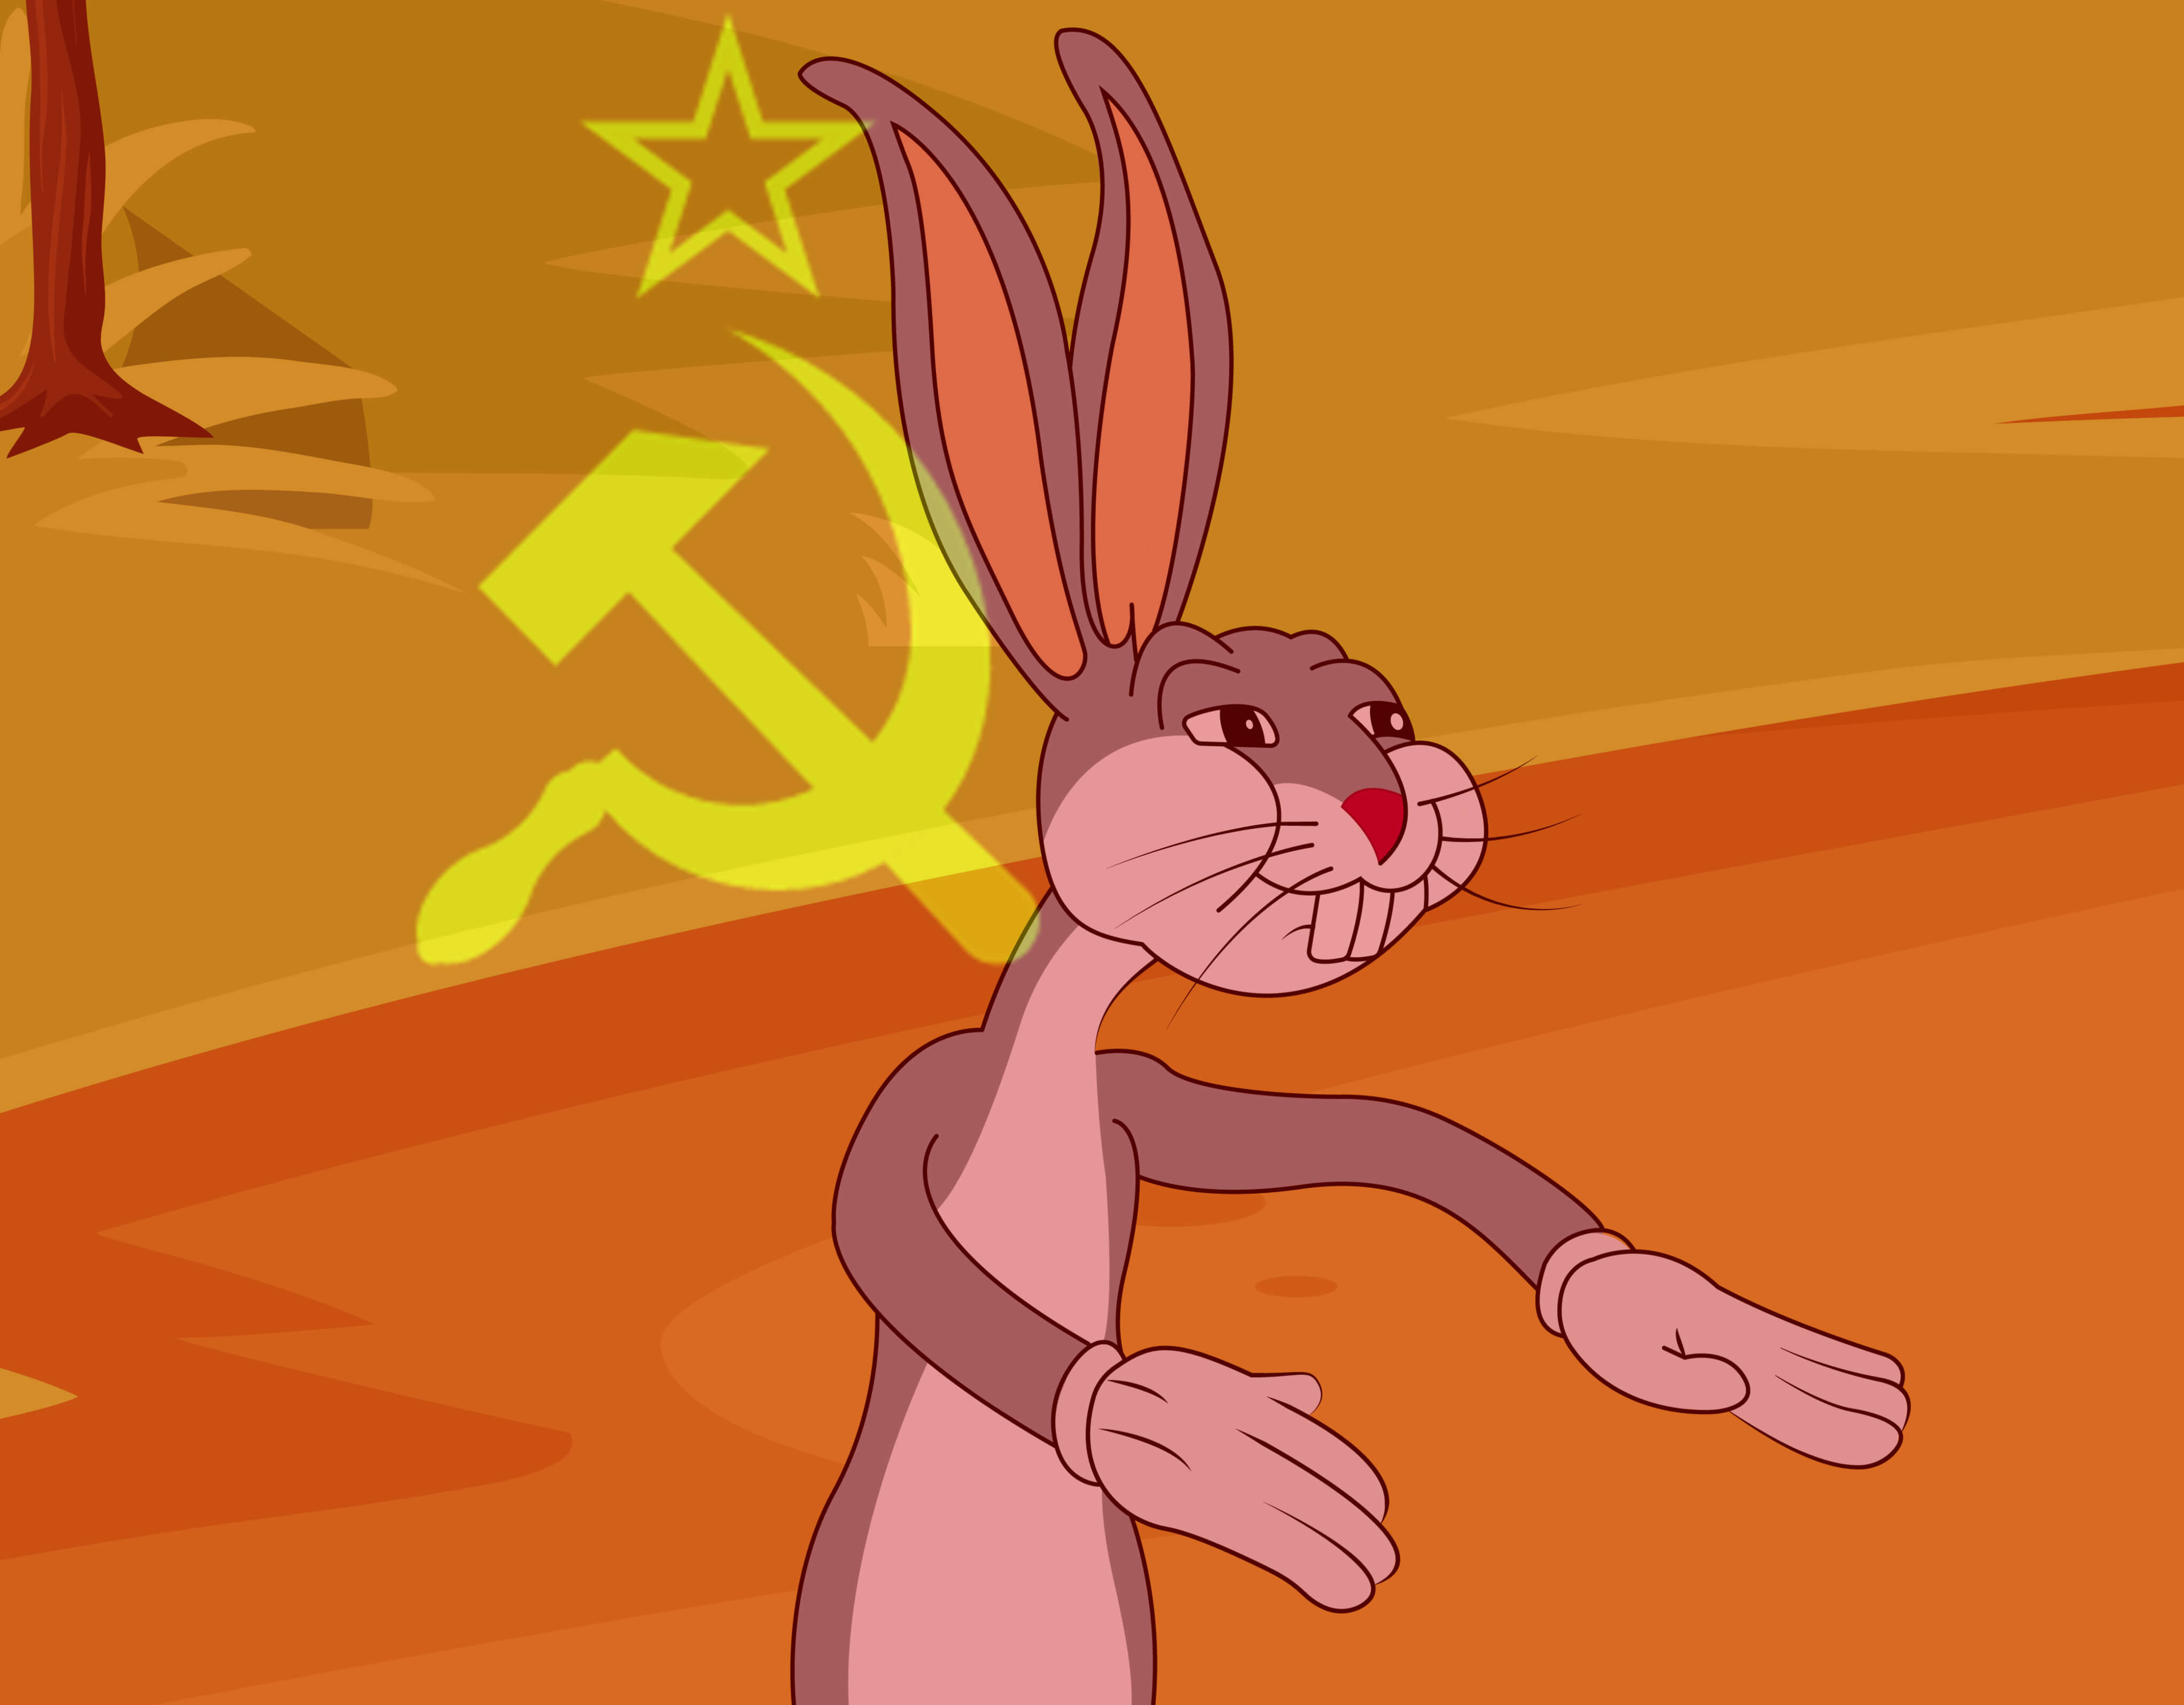 Bugs bunny soviet union